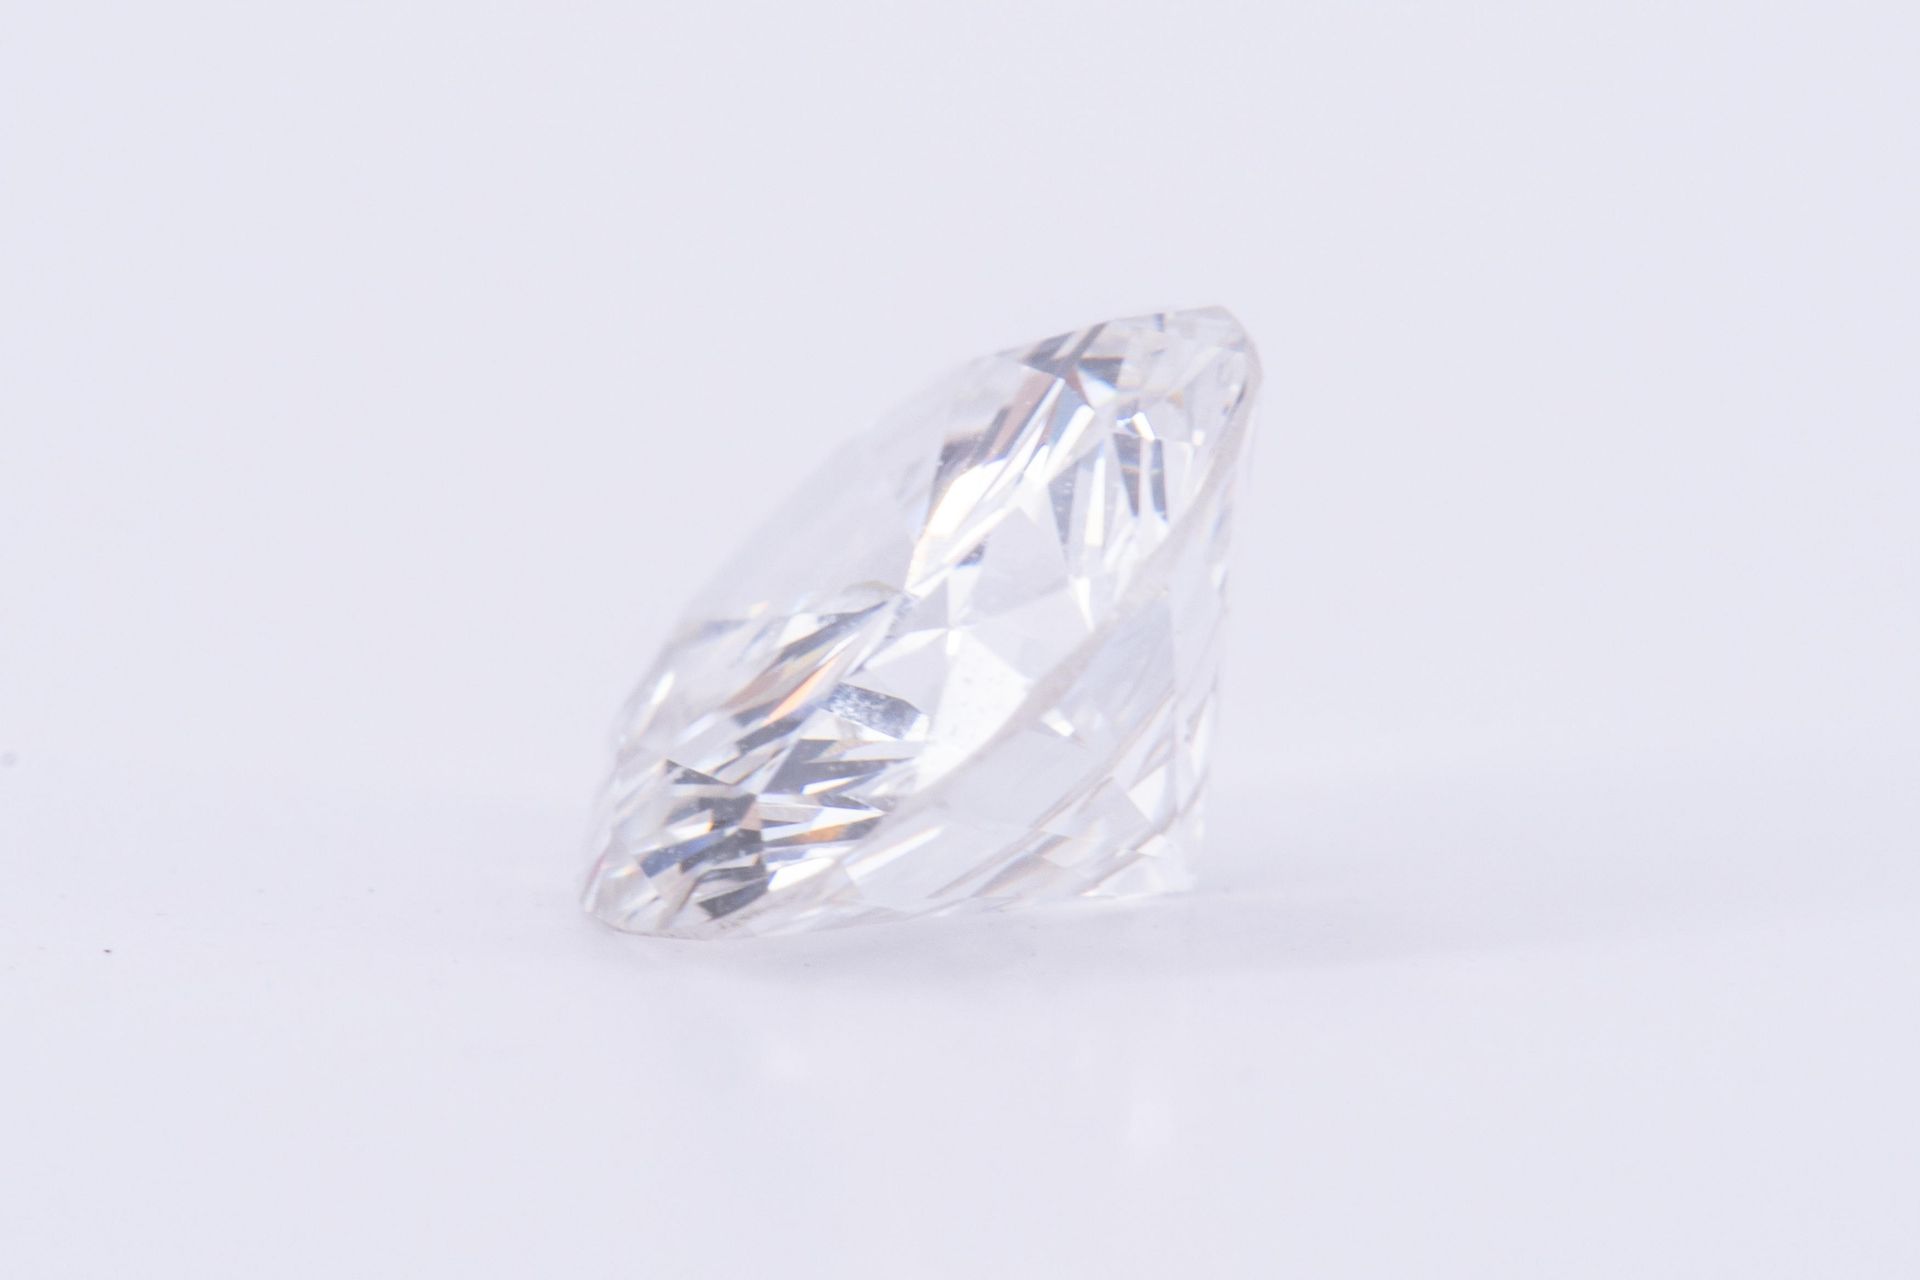 Unmounted Brilliant-Cut Diamond - Image 2 of 3